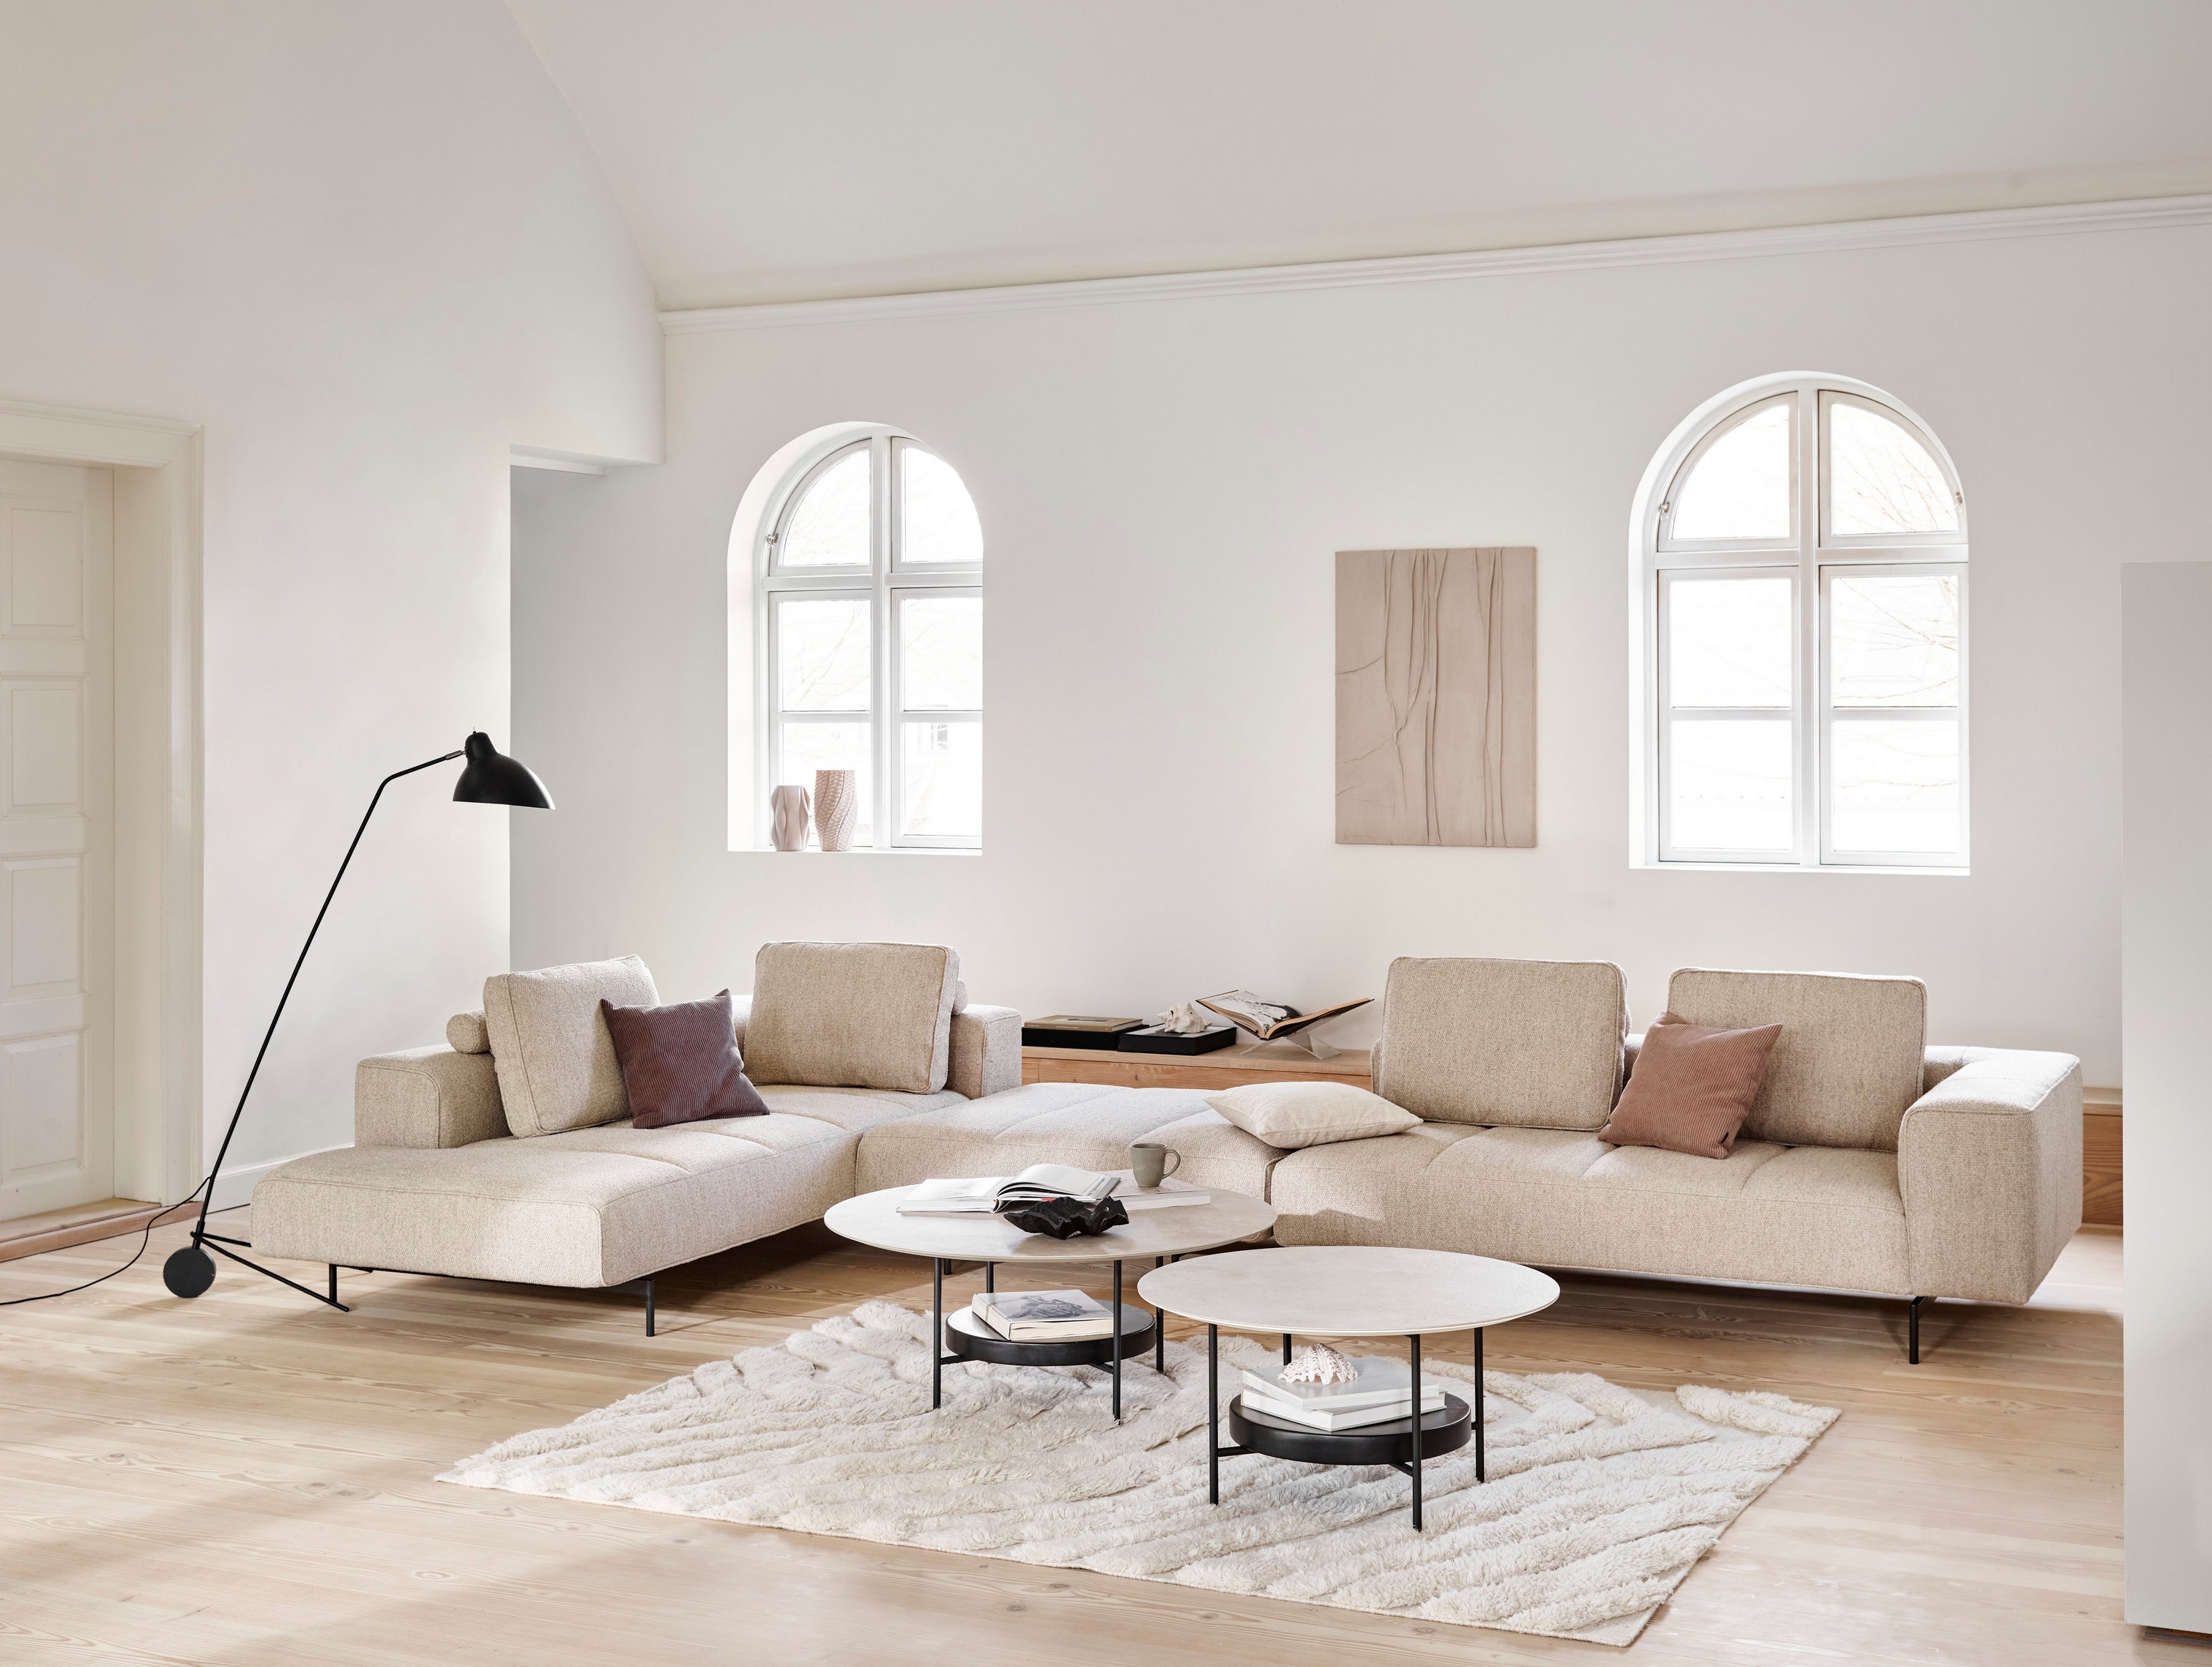 Minimalistisk stue med Amsterdam modulsofa, Madrid sofaborde, gulvlampe og buede vinduer.